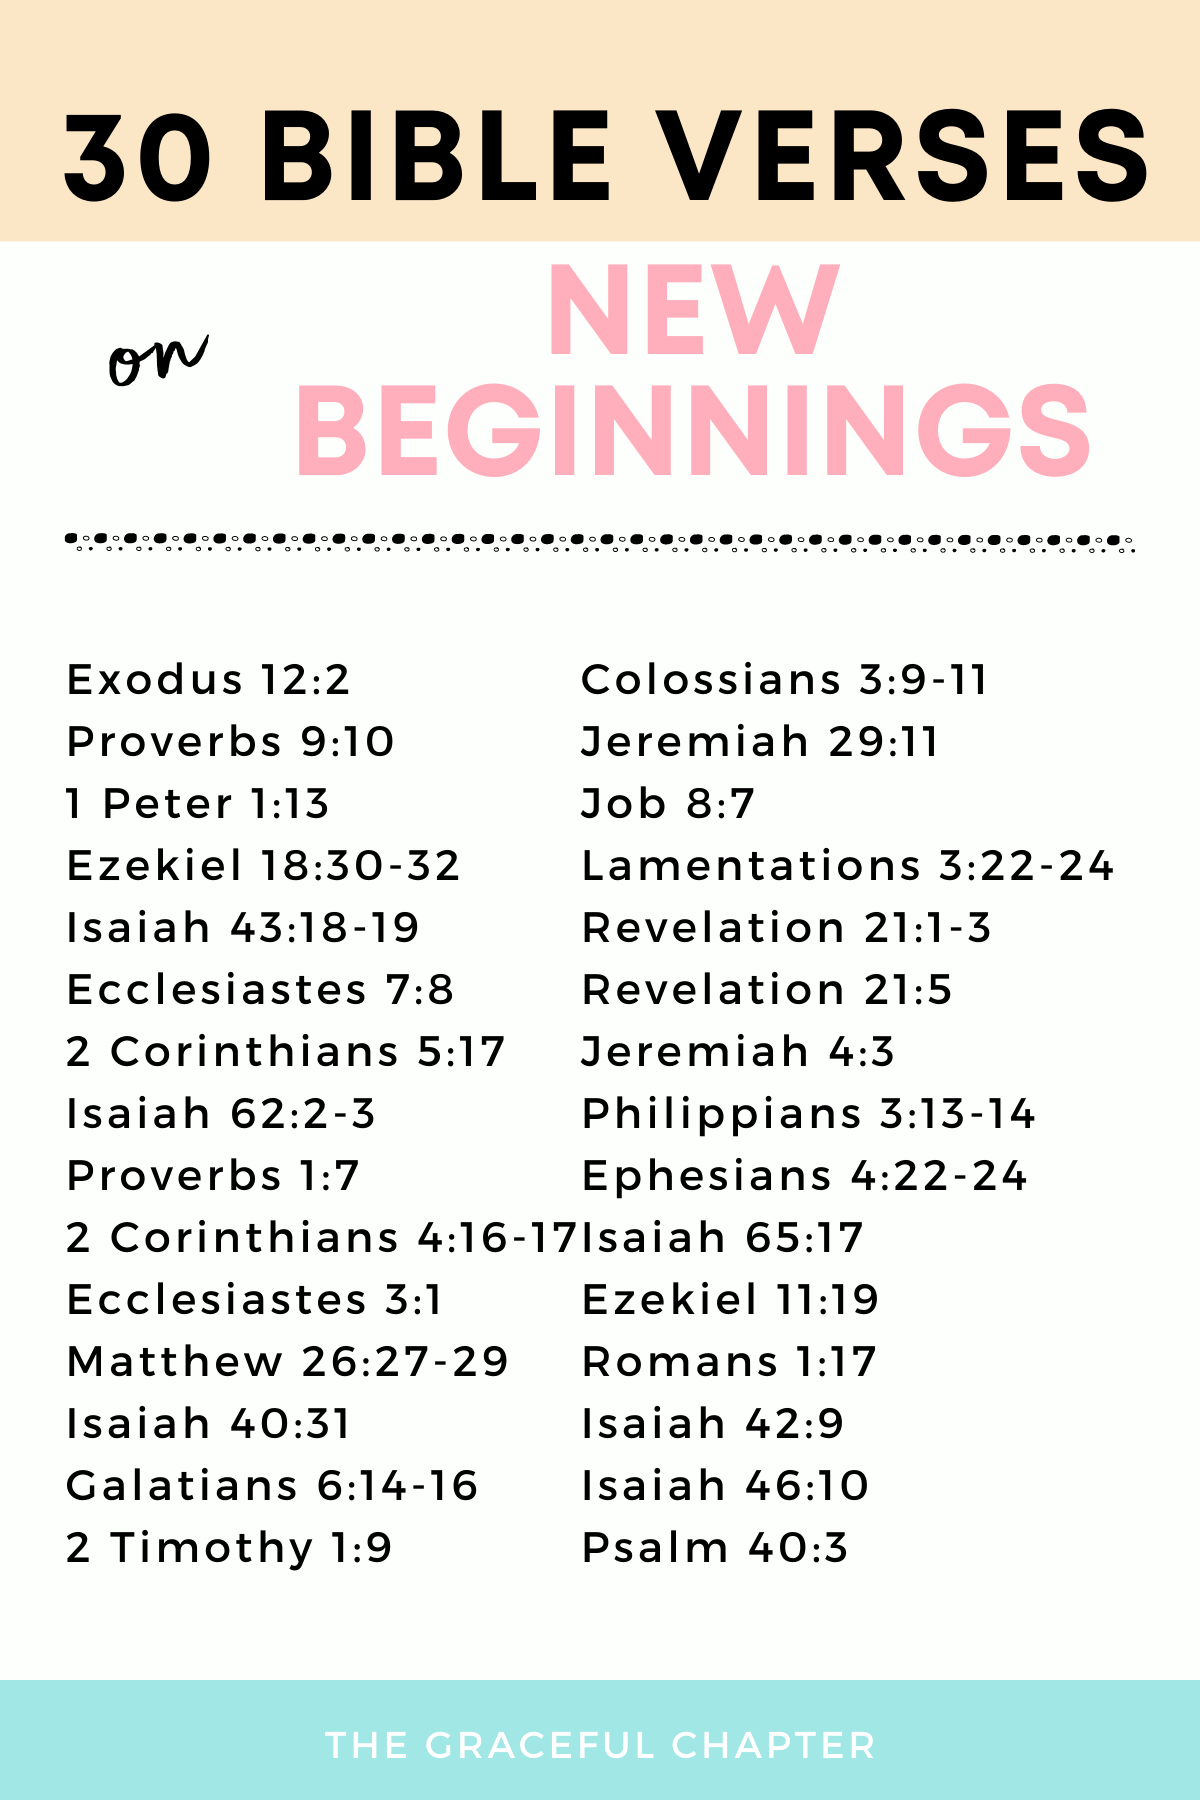 Bible verses on new beginnings